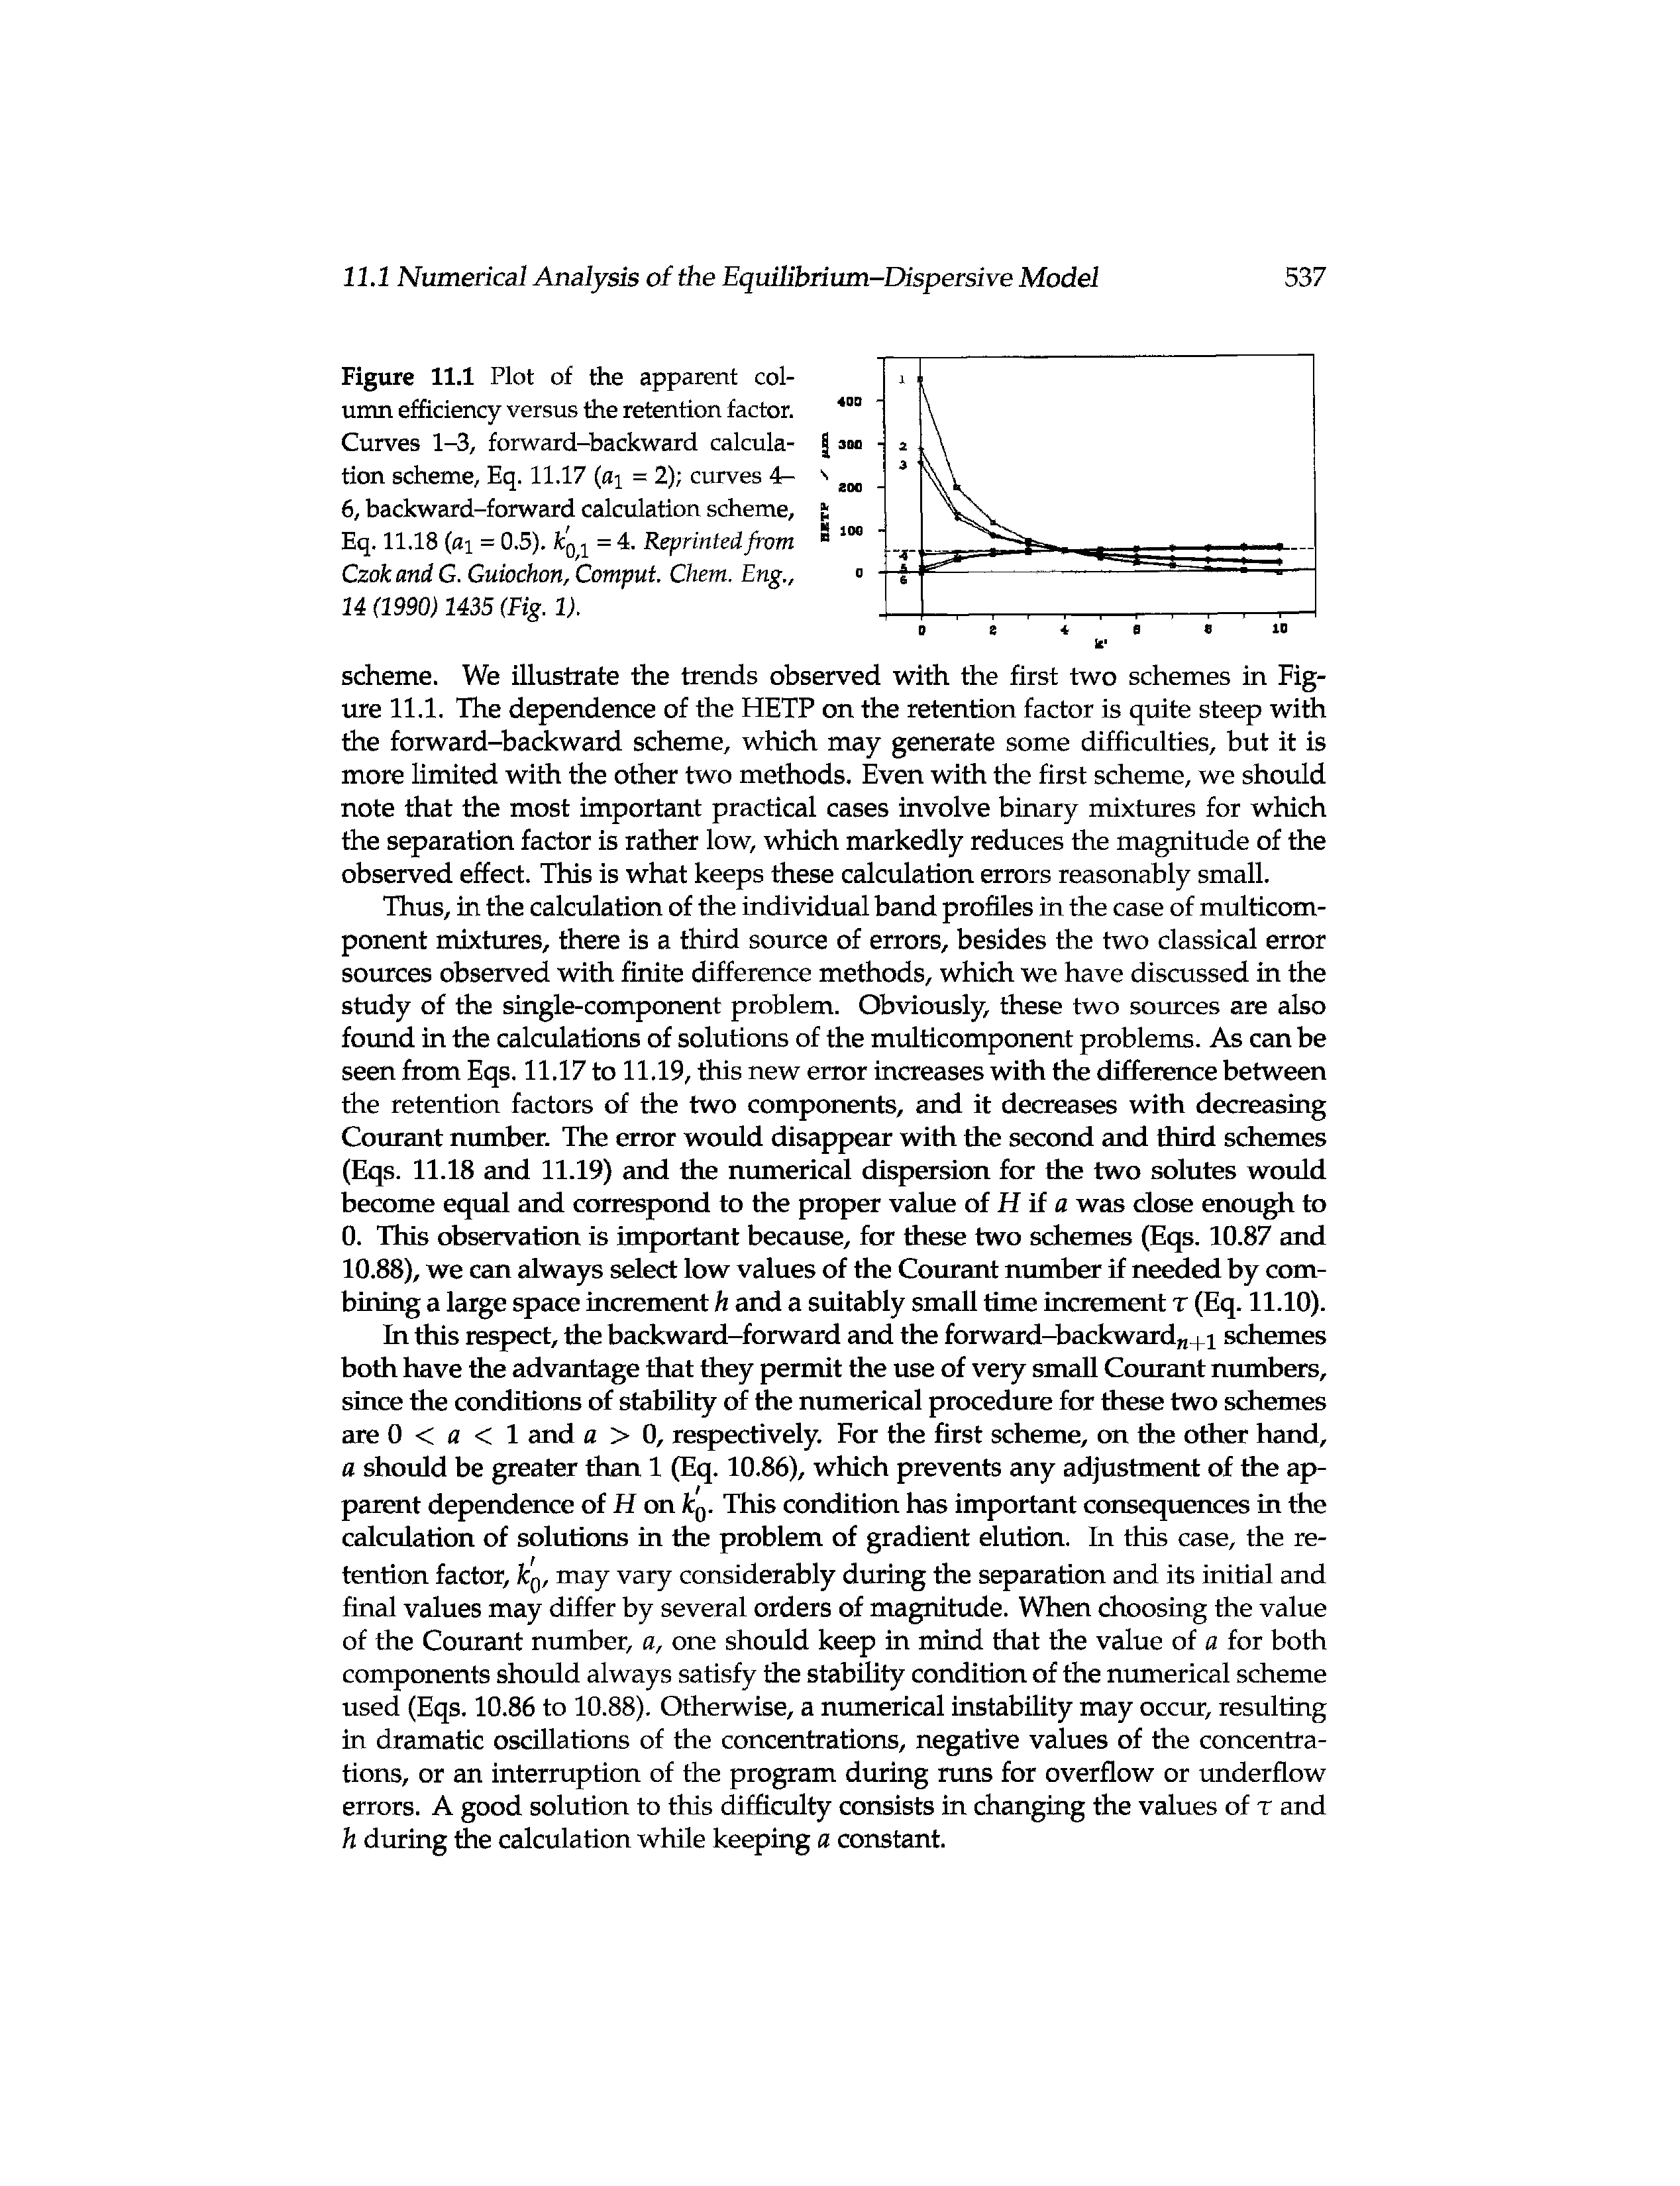 Figure 11.1 Plot of the apparent column efficiency versus the retention factor. Curves 1-3, forward-backward calculation scheme, Eq. 11.17 (ai = 2) curves 4r-6, backward-forward calculation scheme, Eq. 11.18 (fli = 0.5). fcg = 4. Reprinted from Czokand G. Guiochon, Comput. Chem. Eng., 14 (1990) 1435 (Fig. 1).